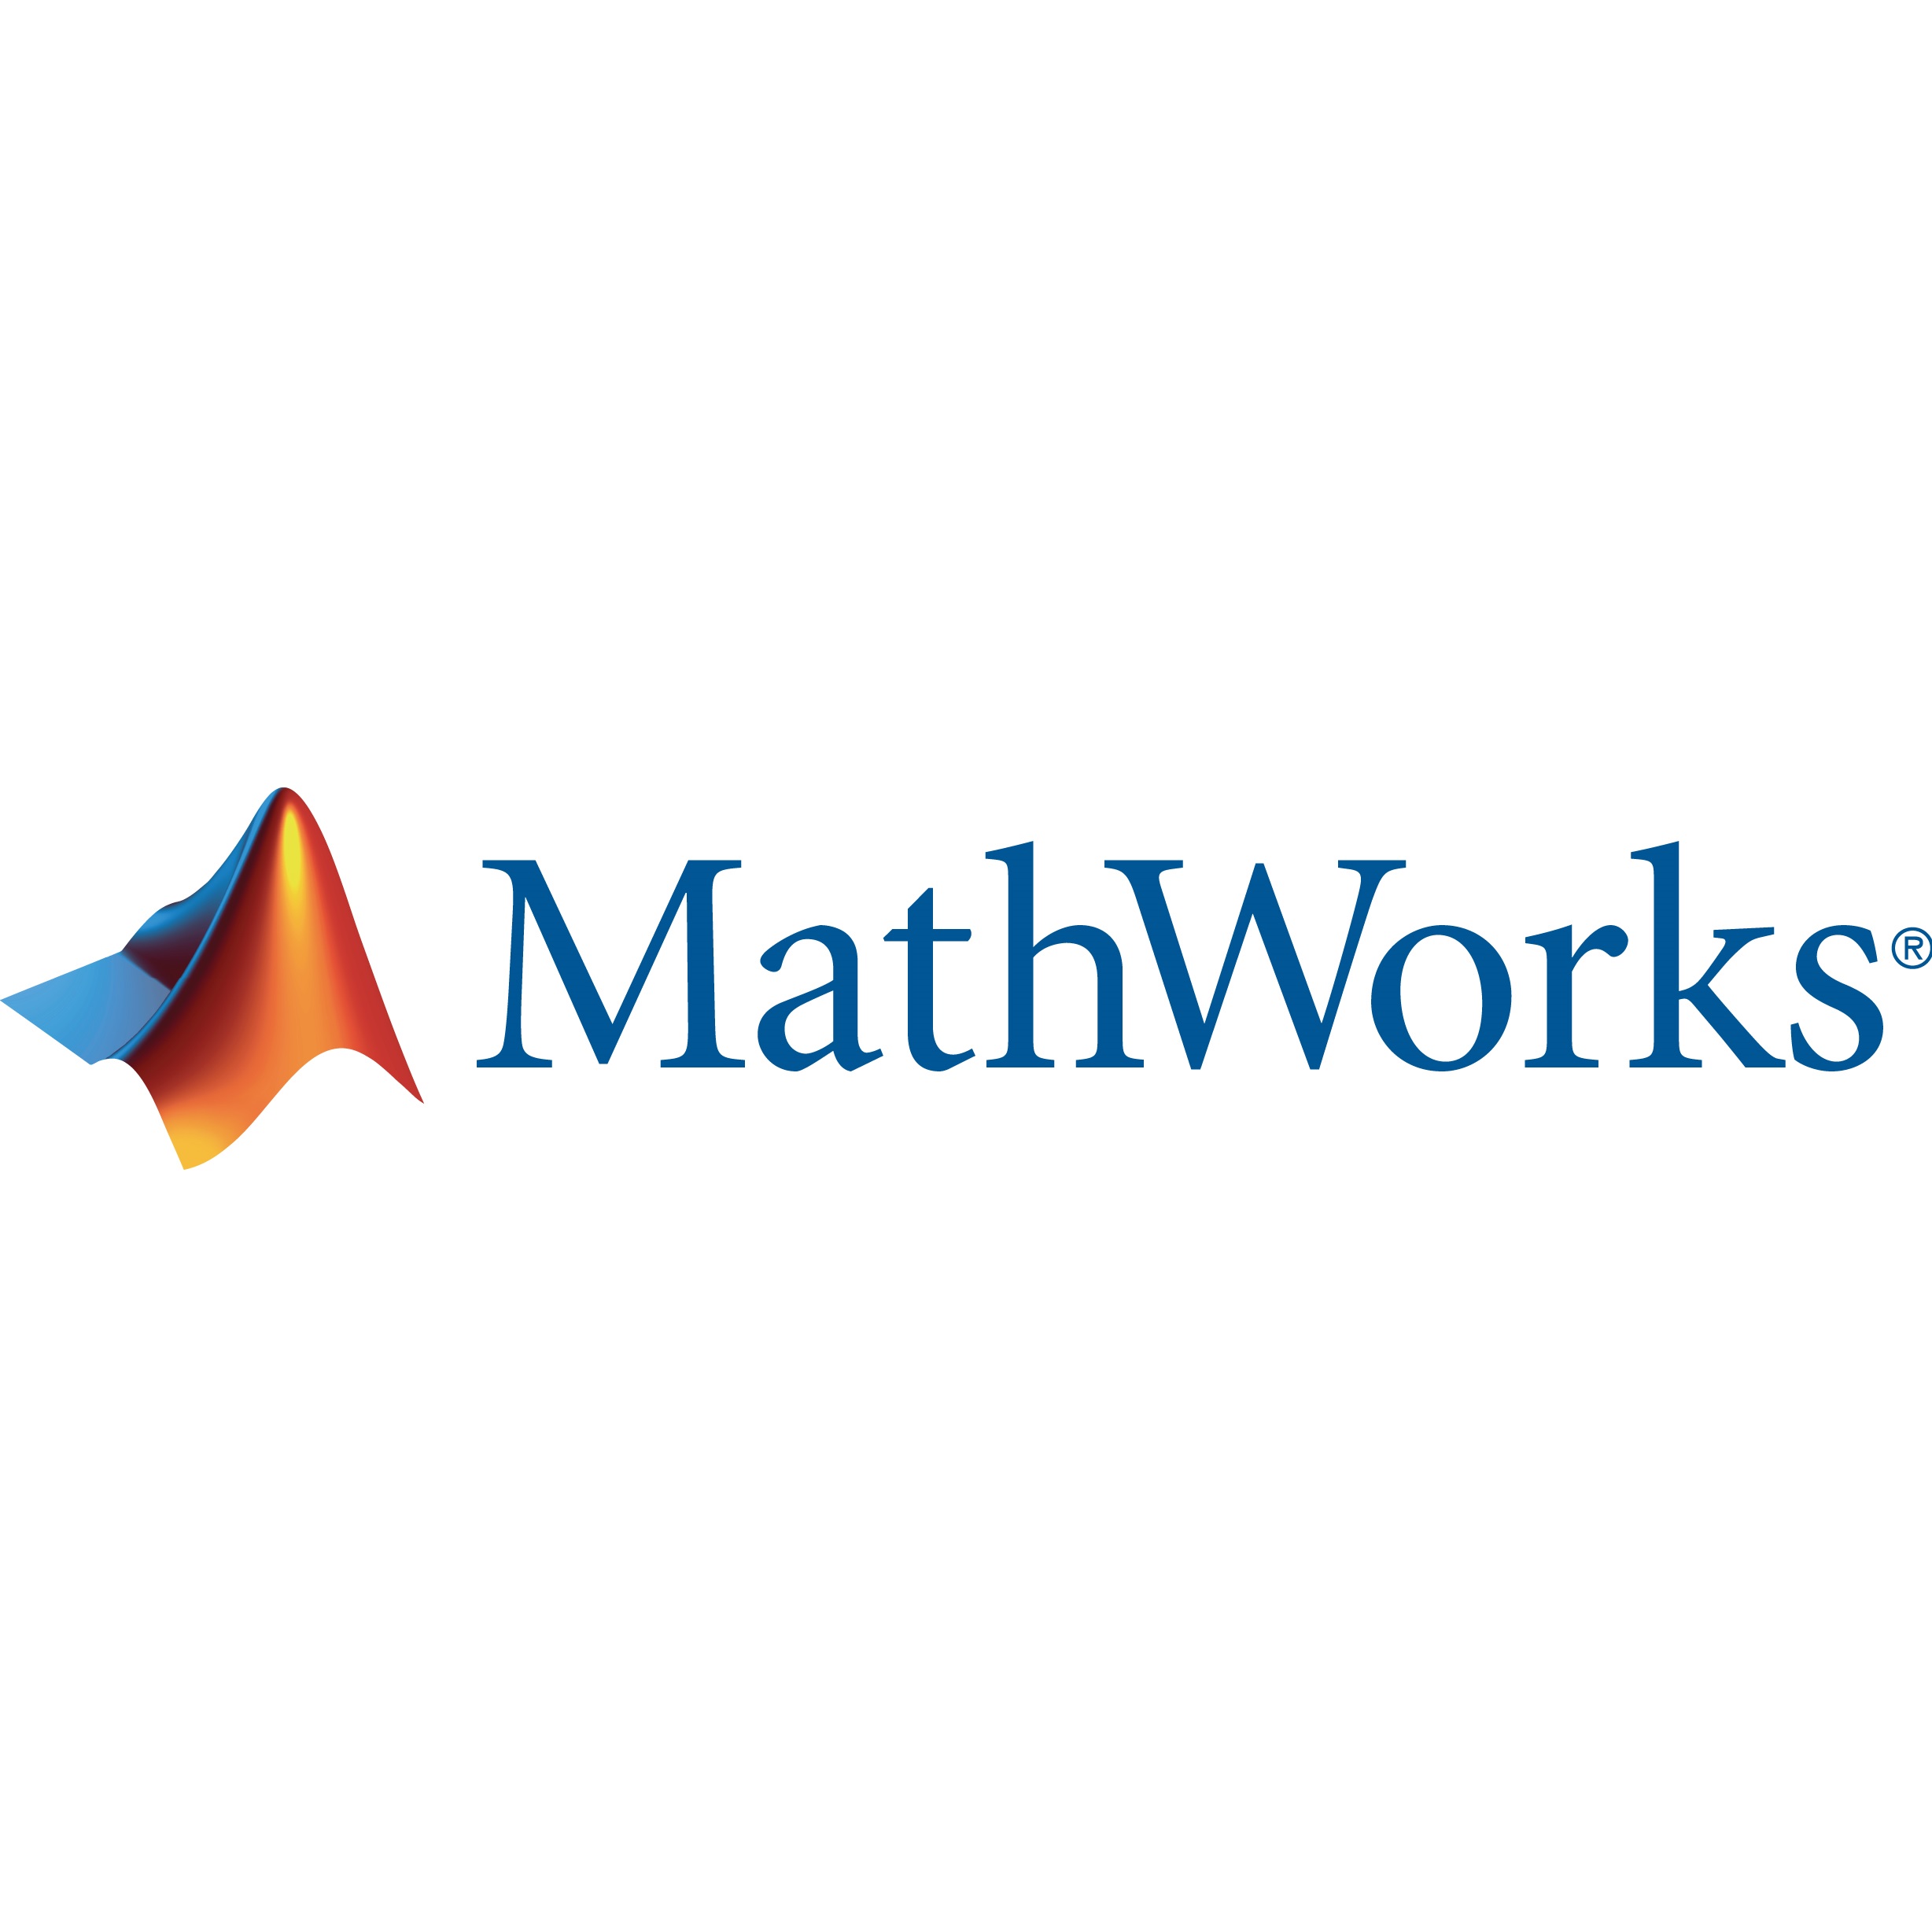 Mathworks logo %28square%29